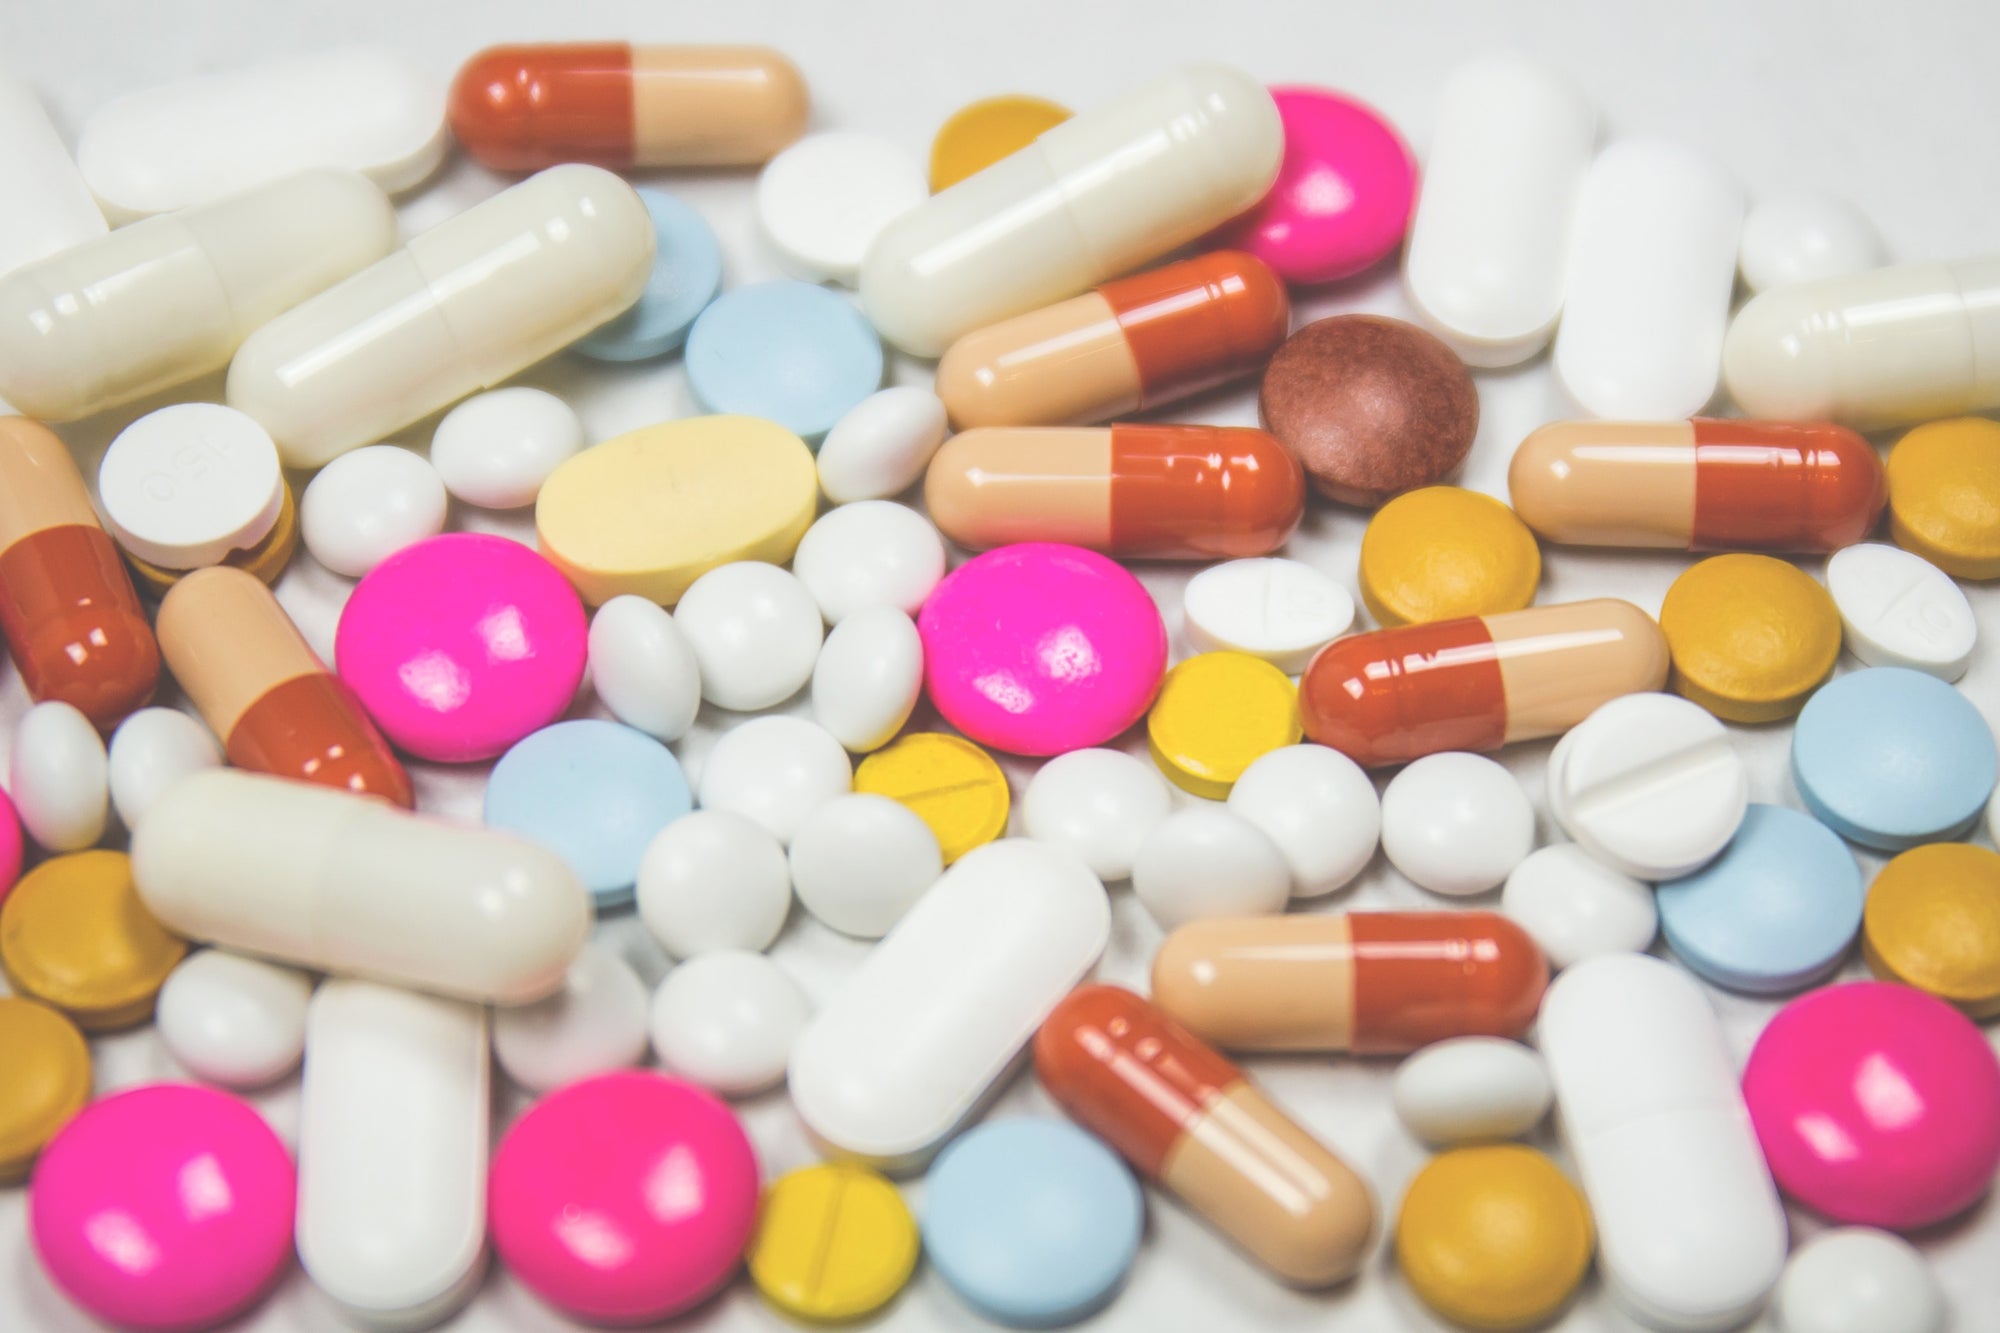 an assortment of prescription pills on a table